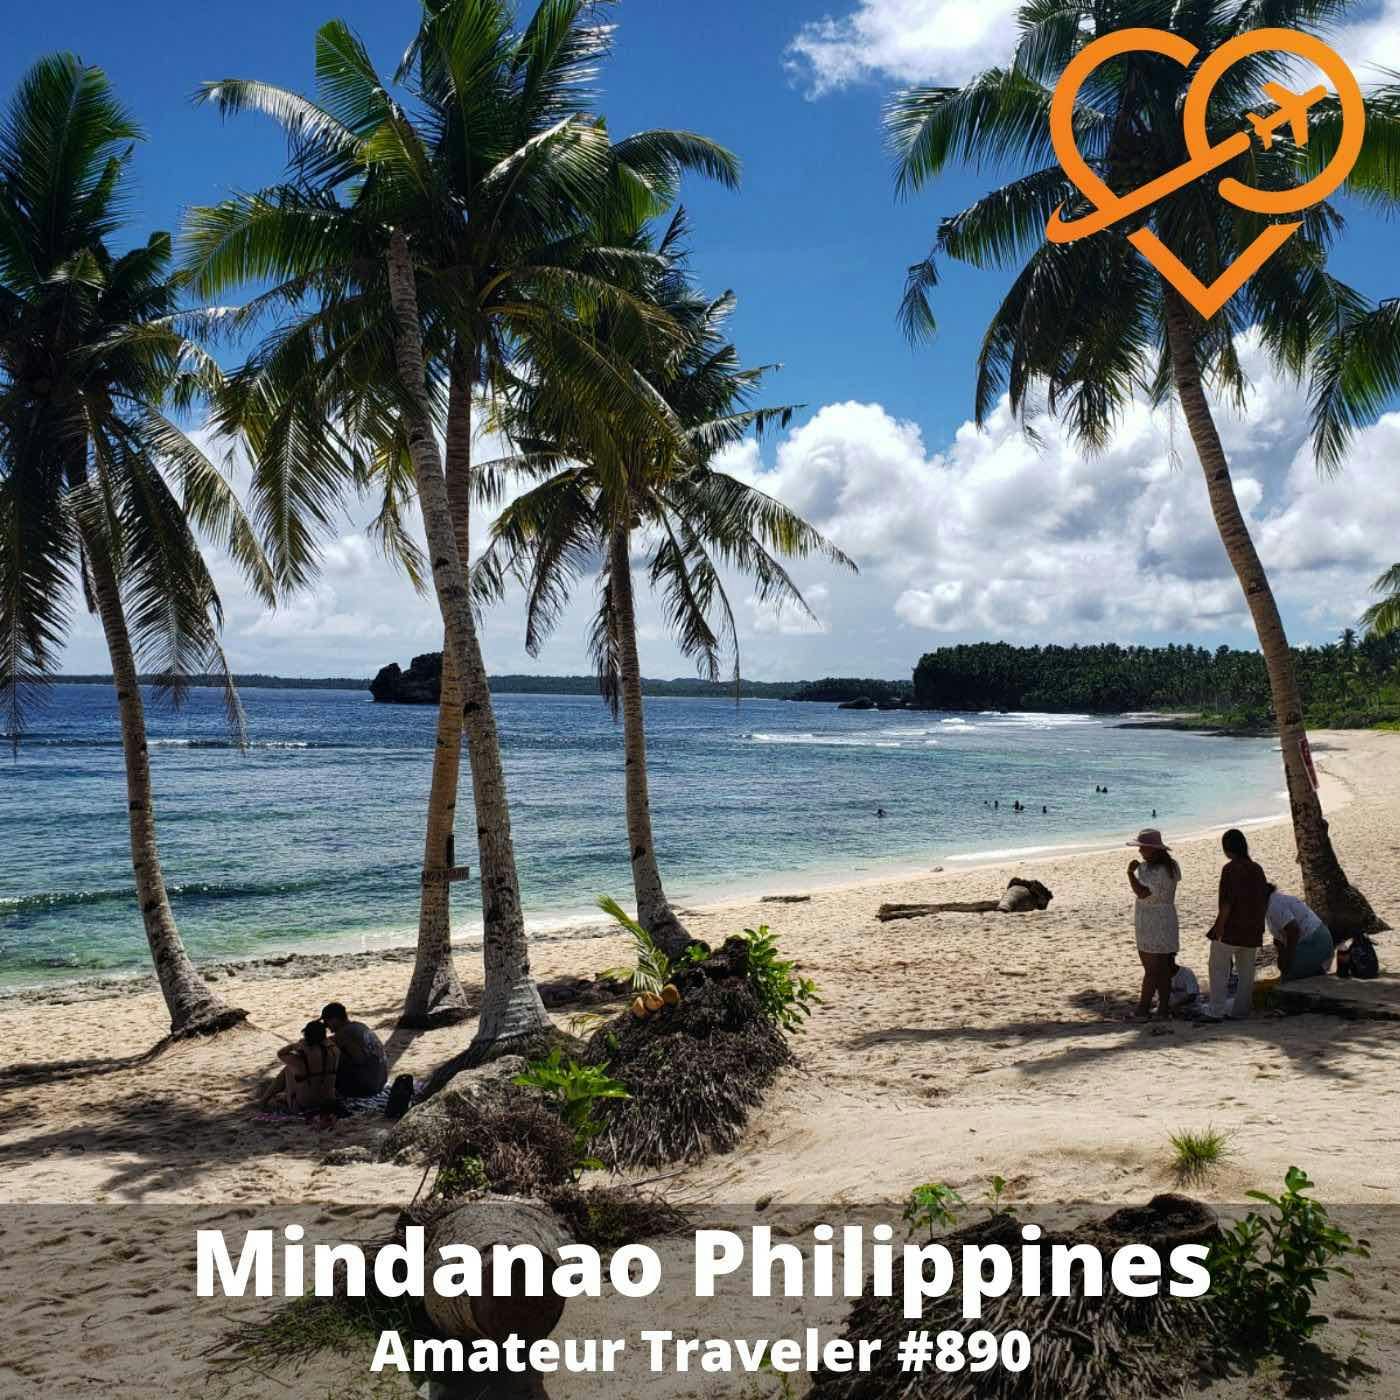 AT#890 - Travel to Mindanao, Philippians